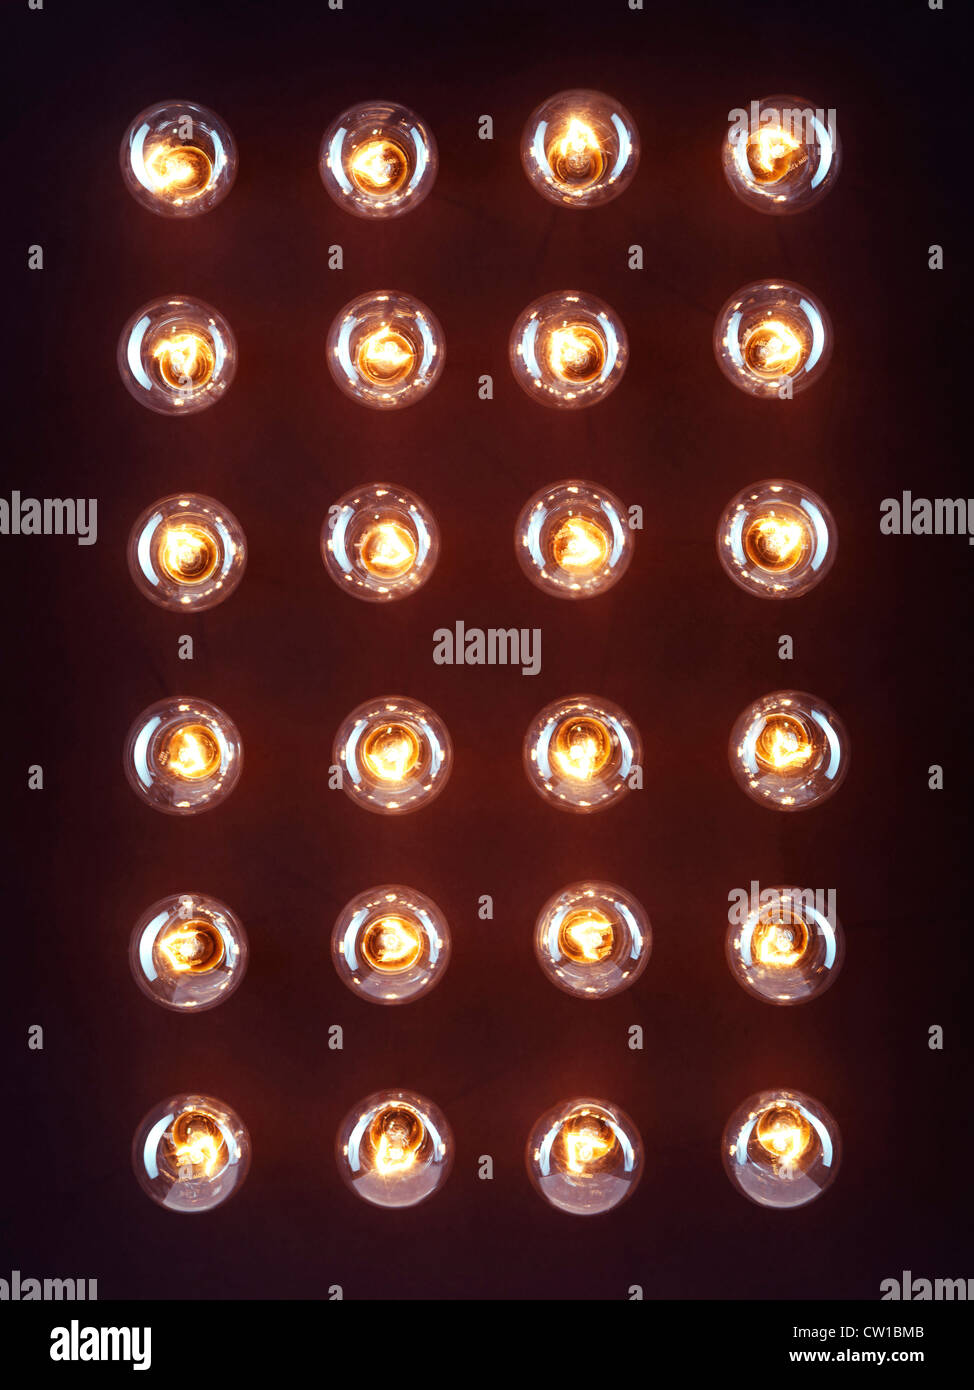 A group of illuminated incandescent light bulbs shining isolated on black background Stock Photo